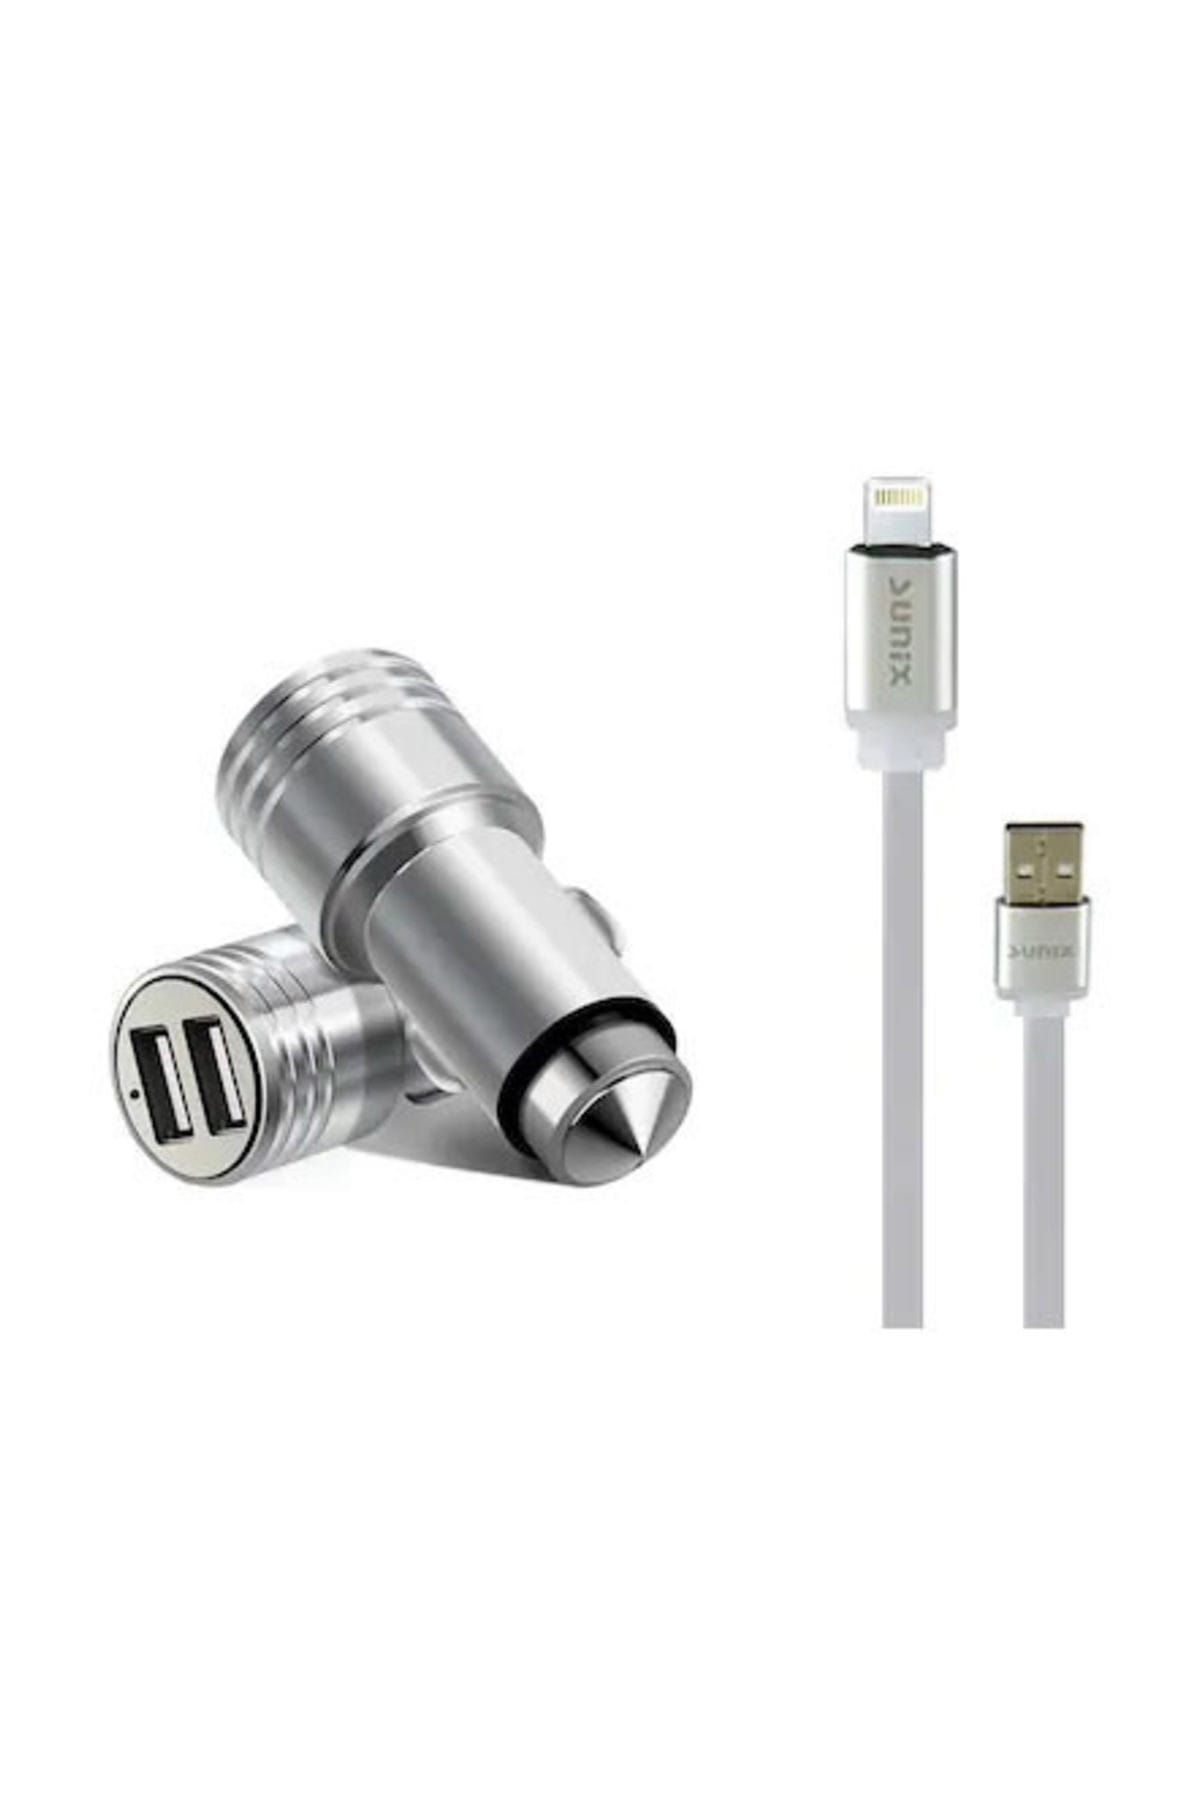 Syronix Apple iPhone Metal Araç  2.4A Lightning Kablolu Hızlı Şarj Aleti Cihazı